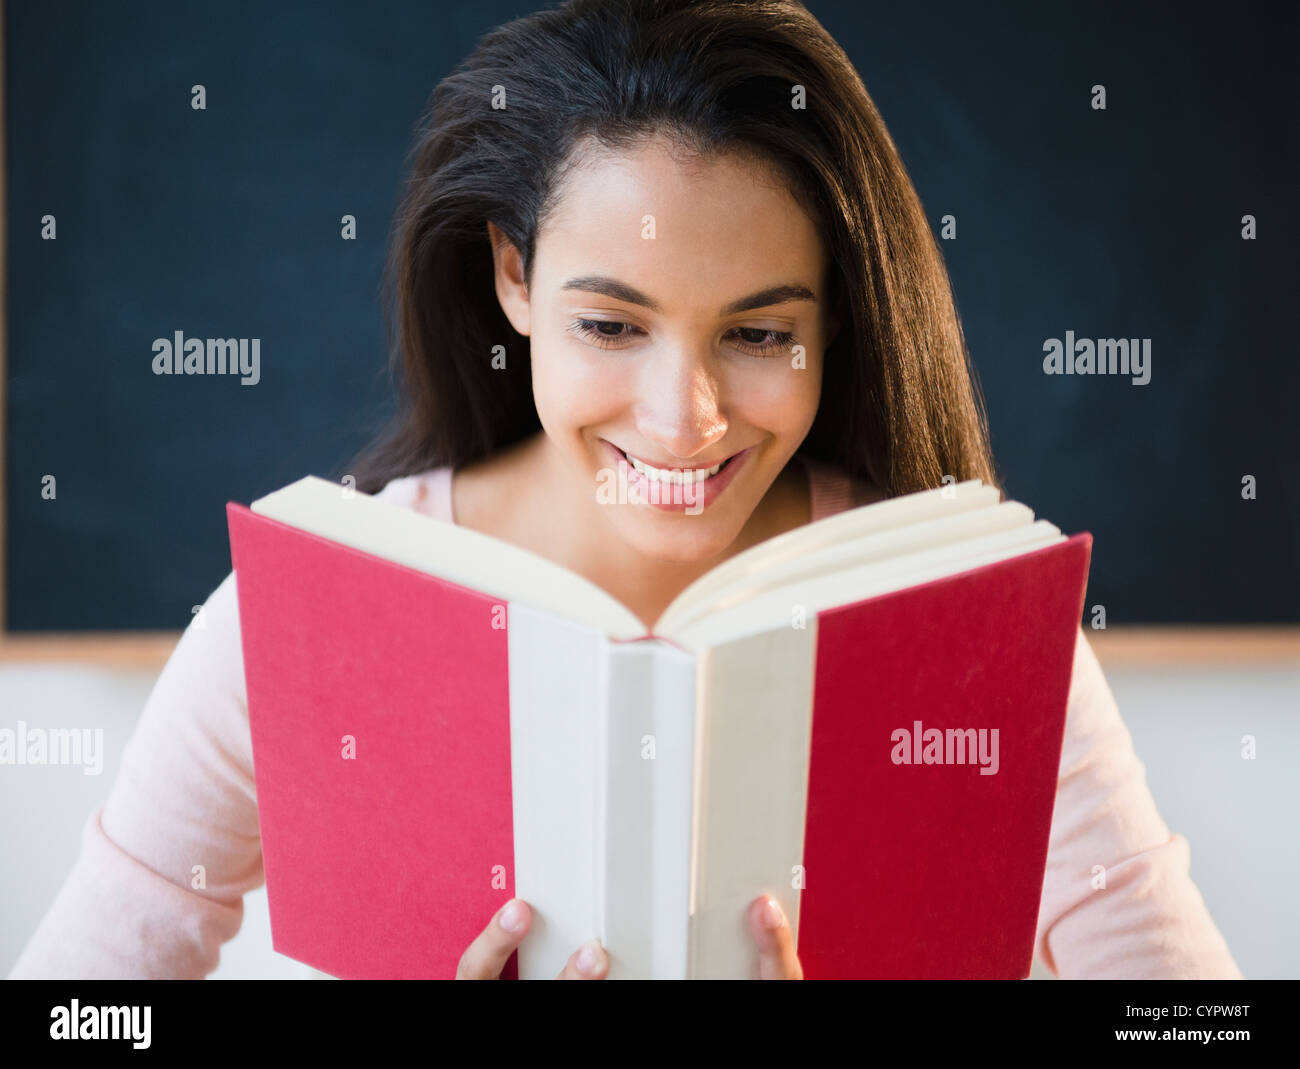 Hispanic teenager reading book Stock Photo